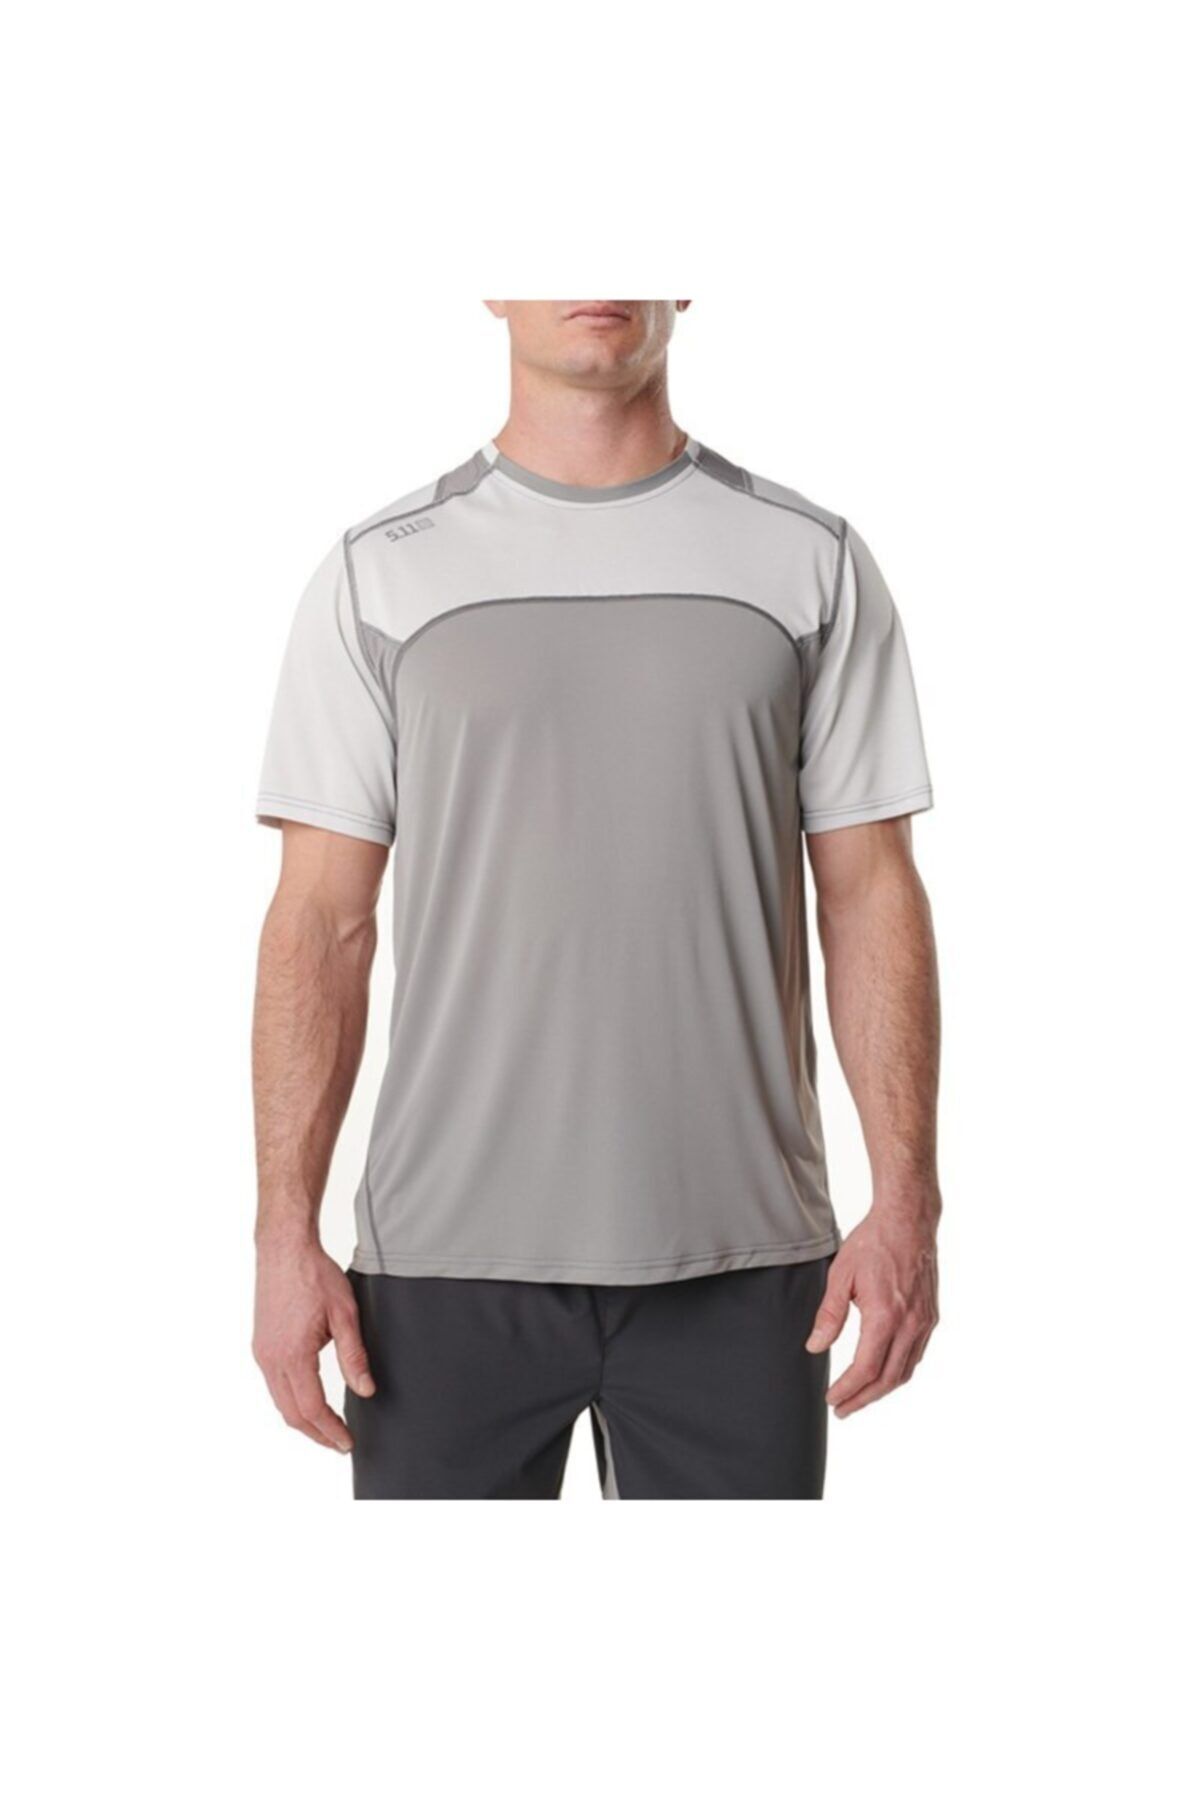 5.11 Tactical Erkek Kahverengi Spor Tshirt